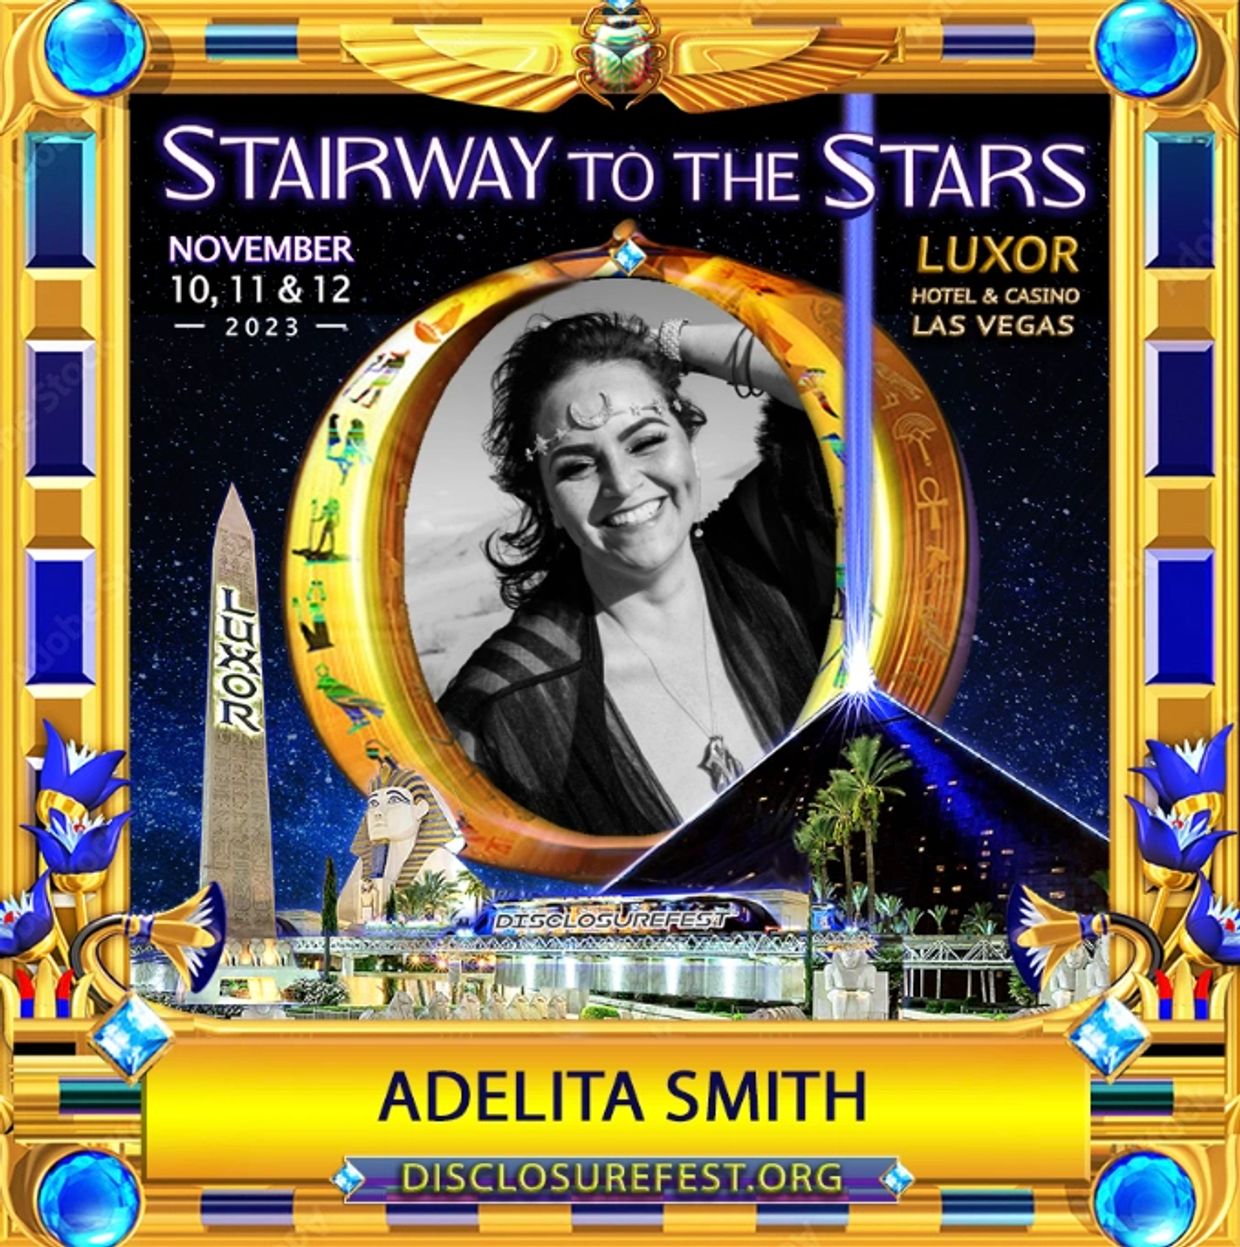 Medium Adelita
Disclosurefest
Stairway to the stars